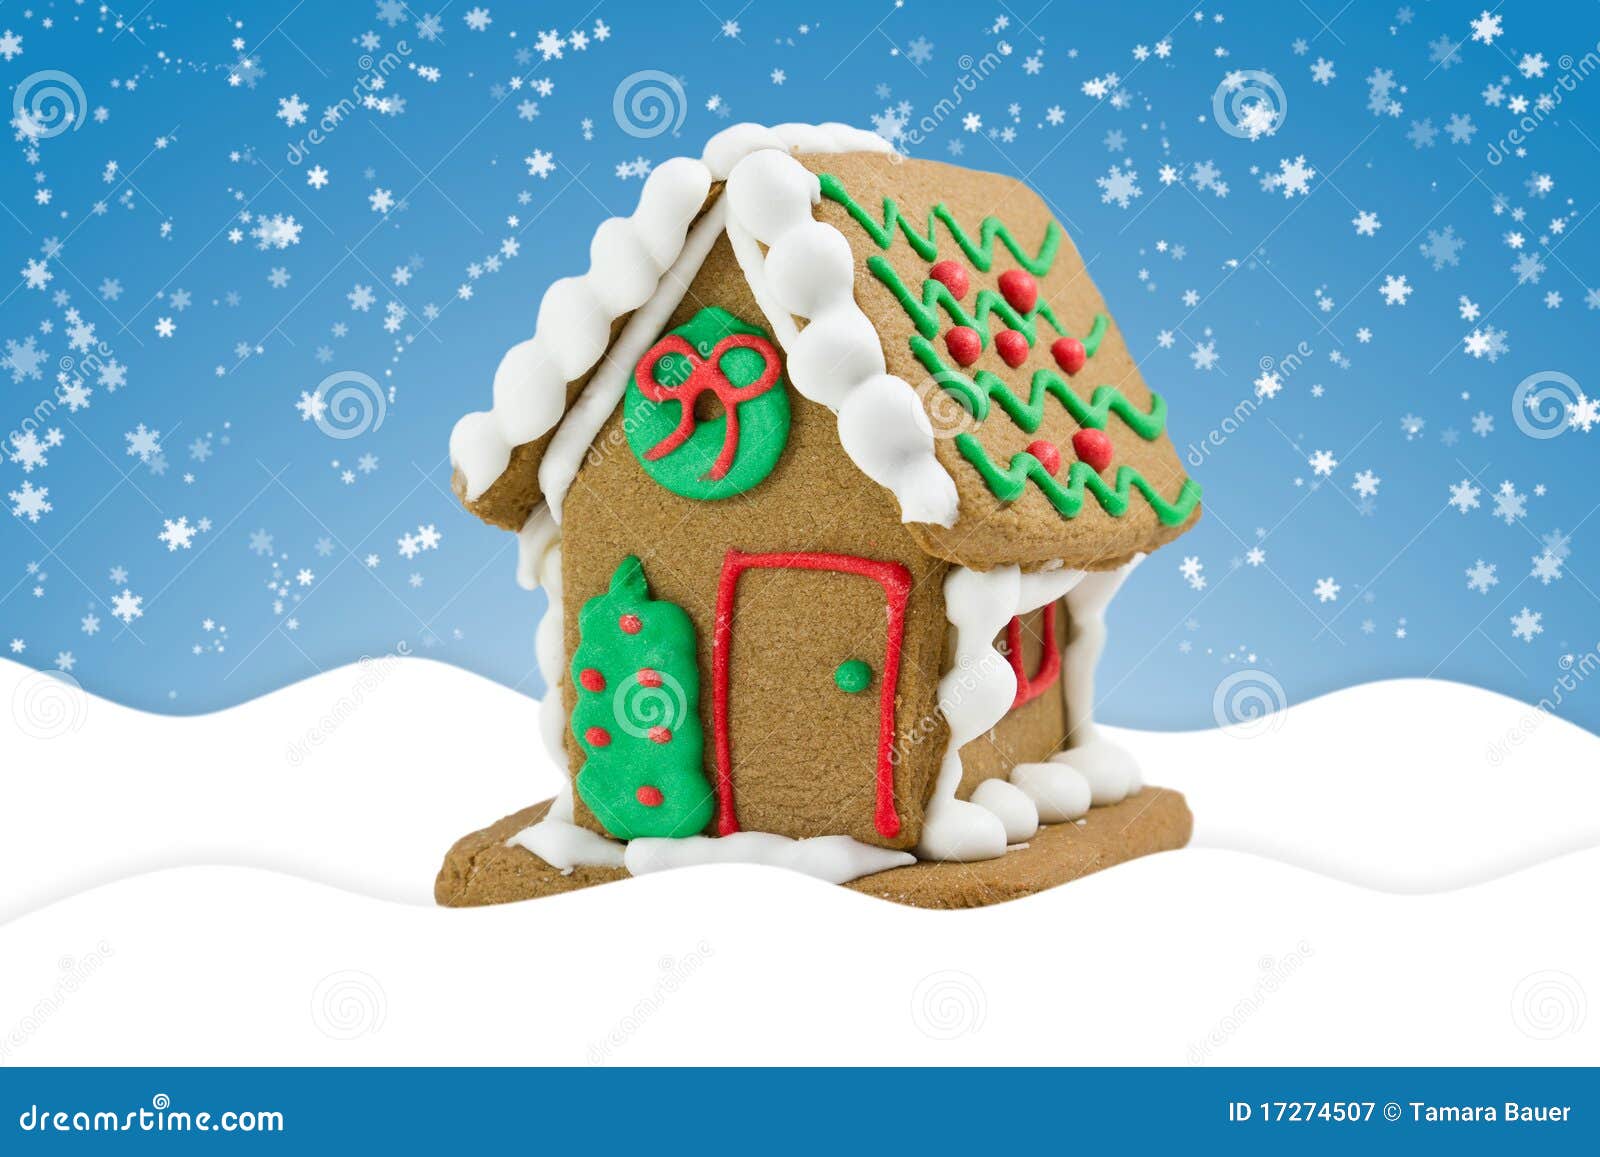 cute gingerbread house clipart - photo #25